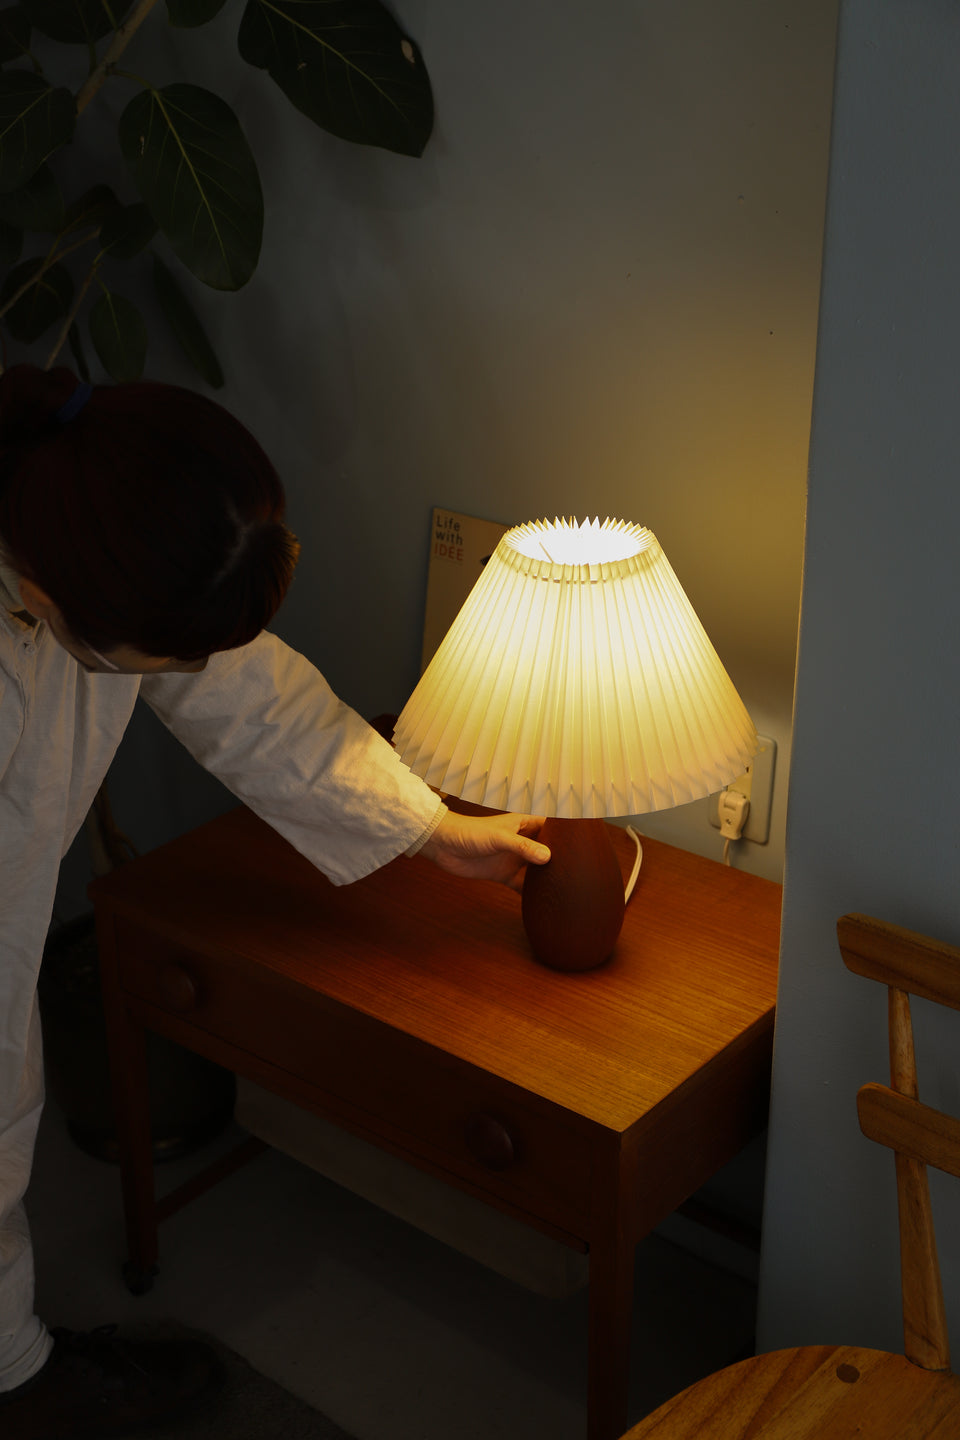 Teakwood Table Lamp Danish Vintage/デンマークヴィンテージ テーブルランプ チーク材 間接照明 北欧インテリア